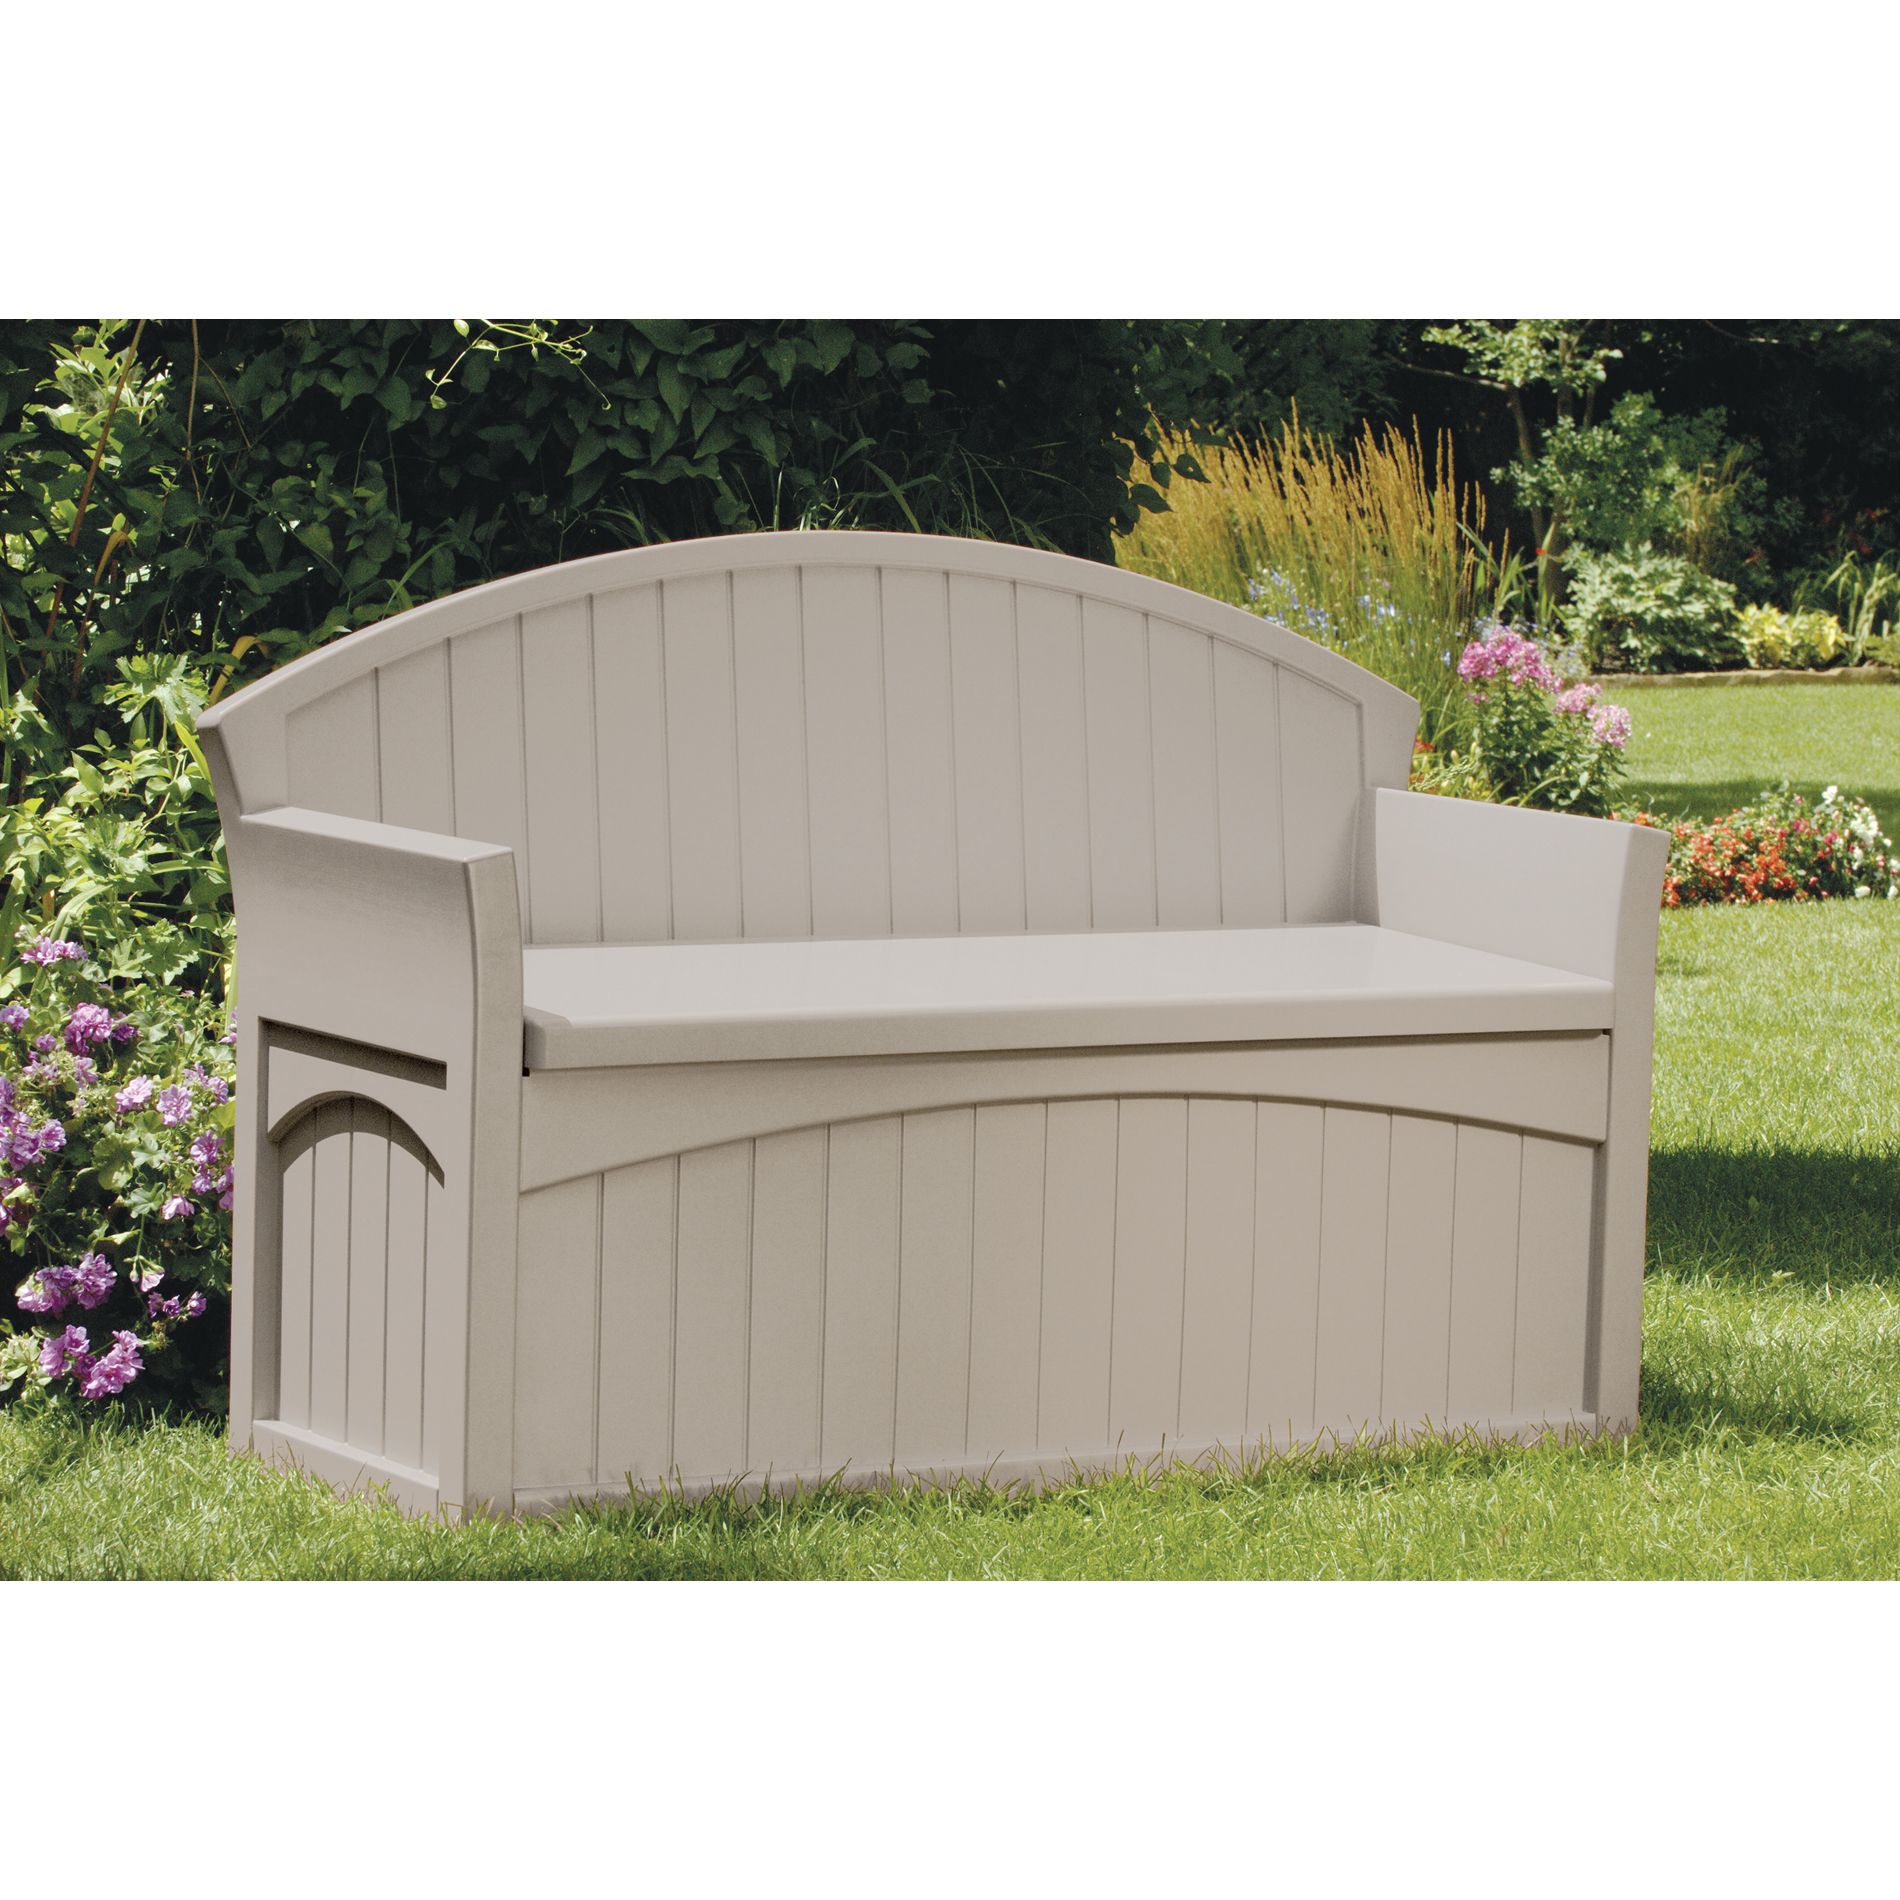 Suncast Patio Bench W Storage, Outdoor Porch Bench With Storage